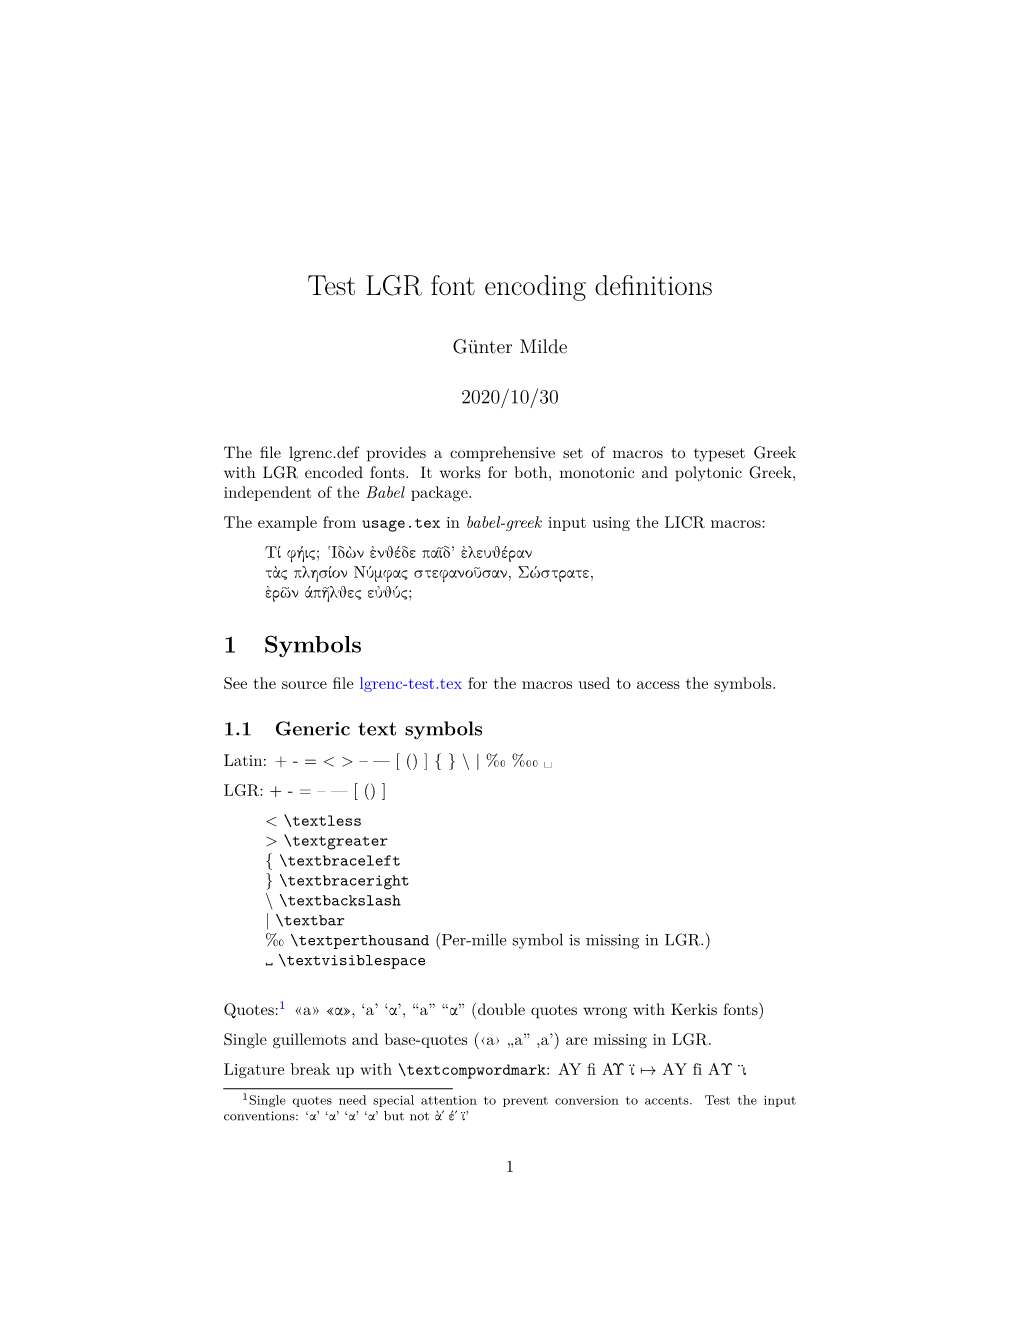 Test LGR Font Encoding Definitions